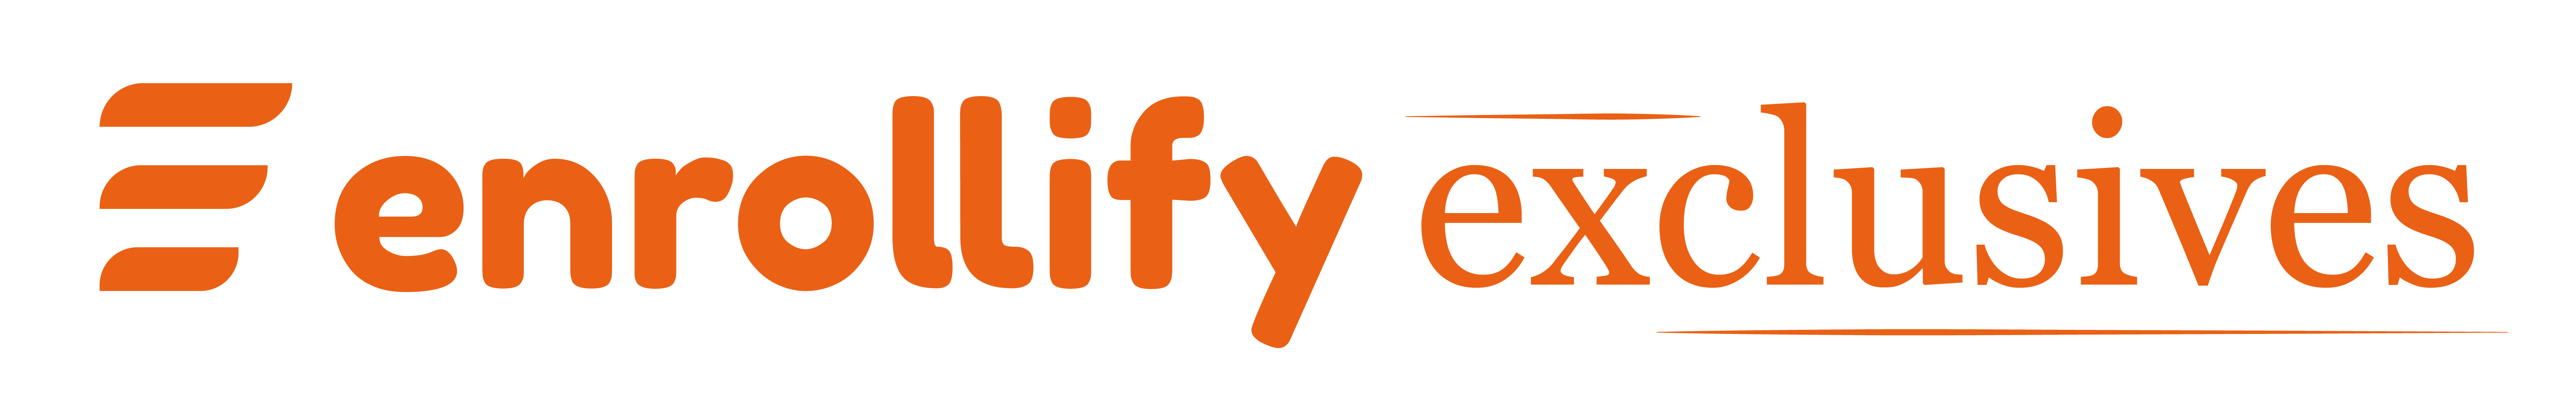 Enrollify Exclusives logo